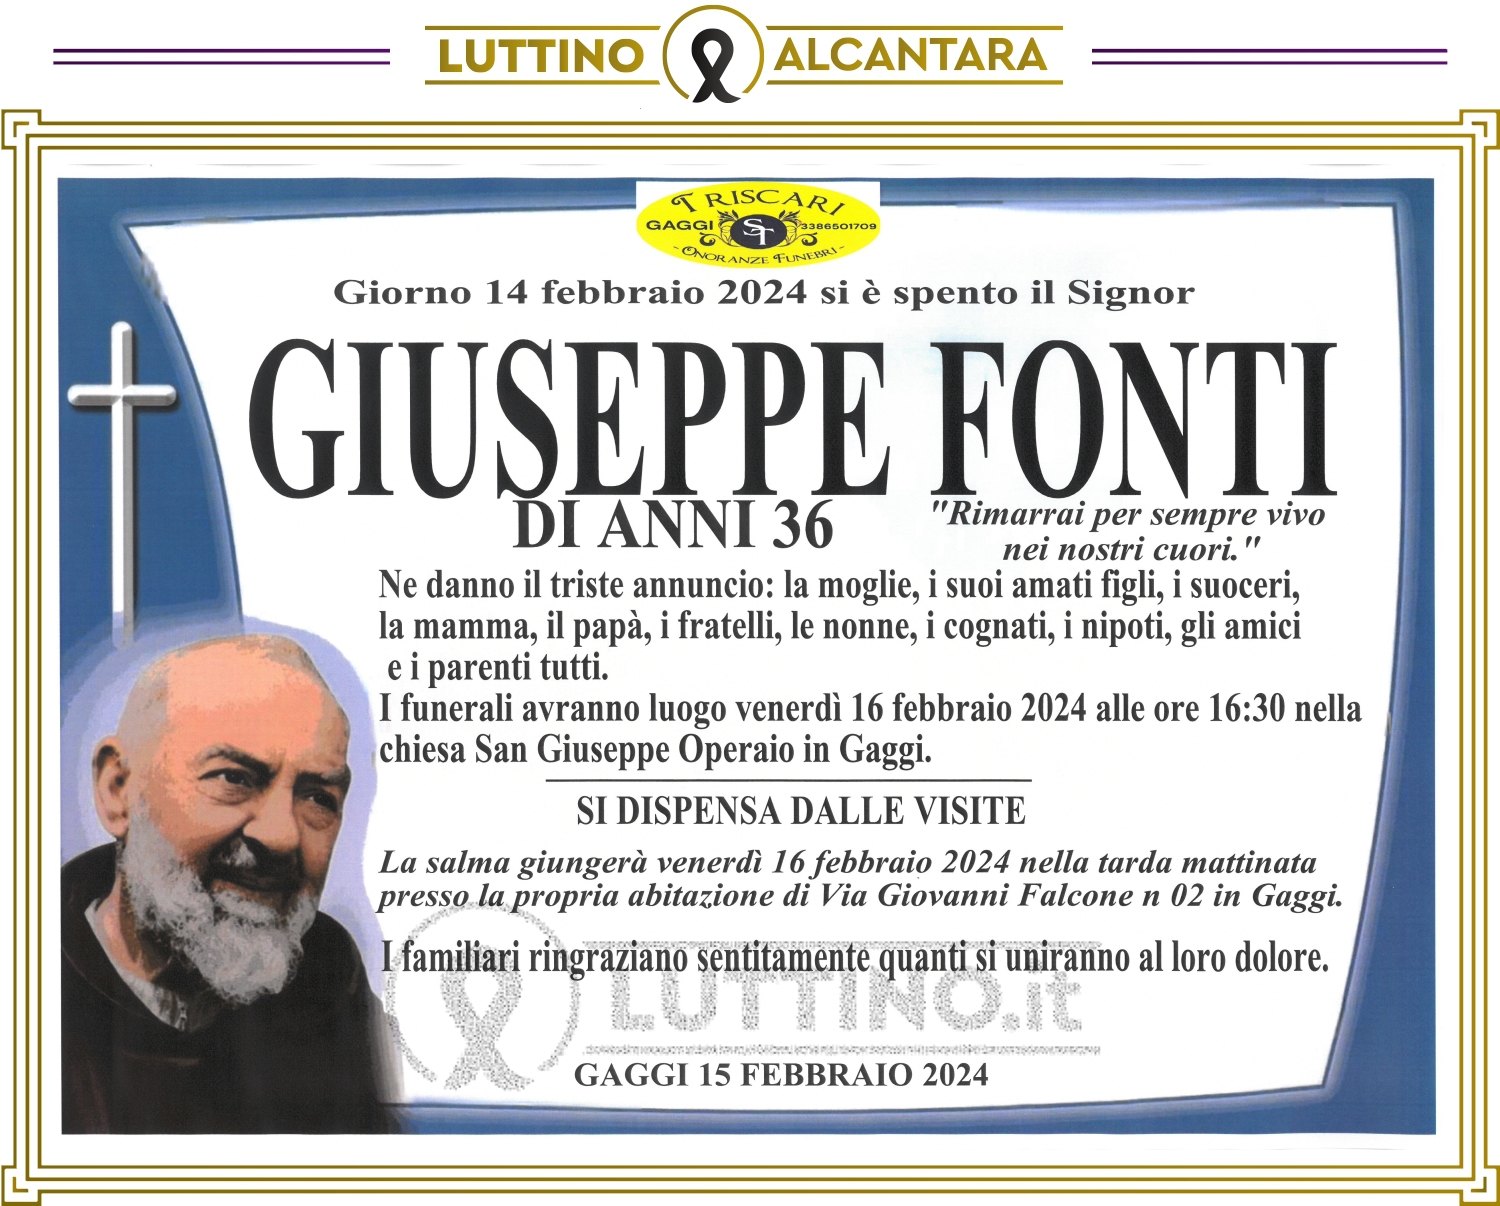 Giuseppe Fonti